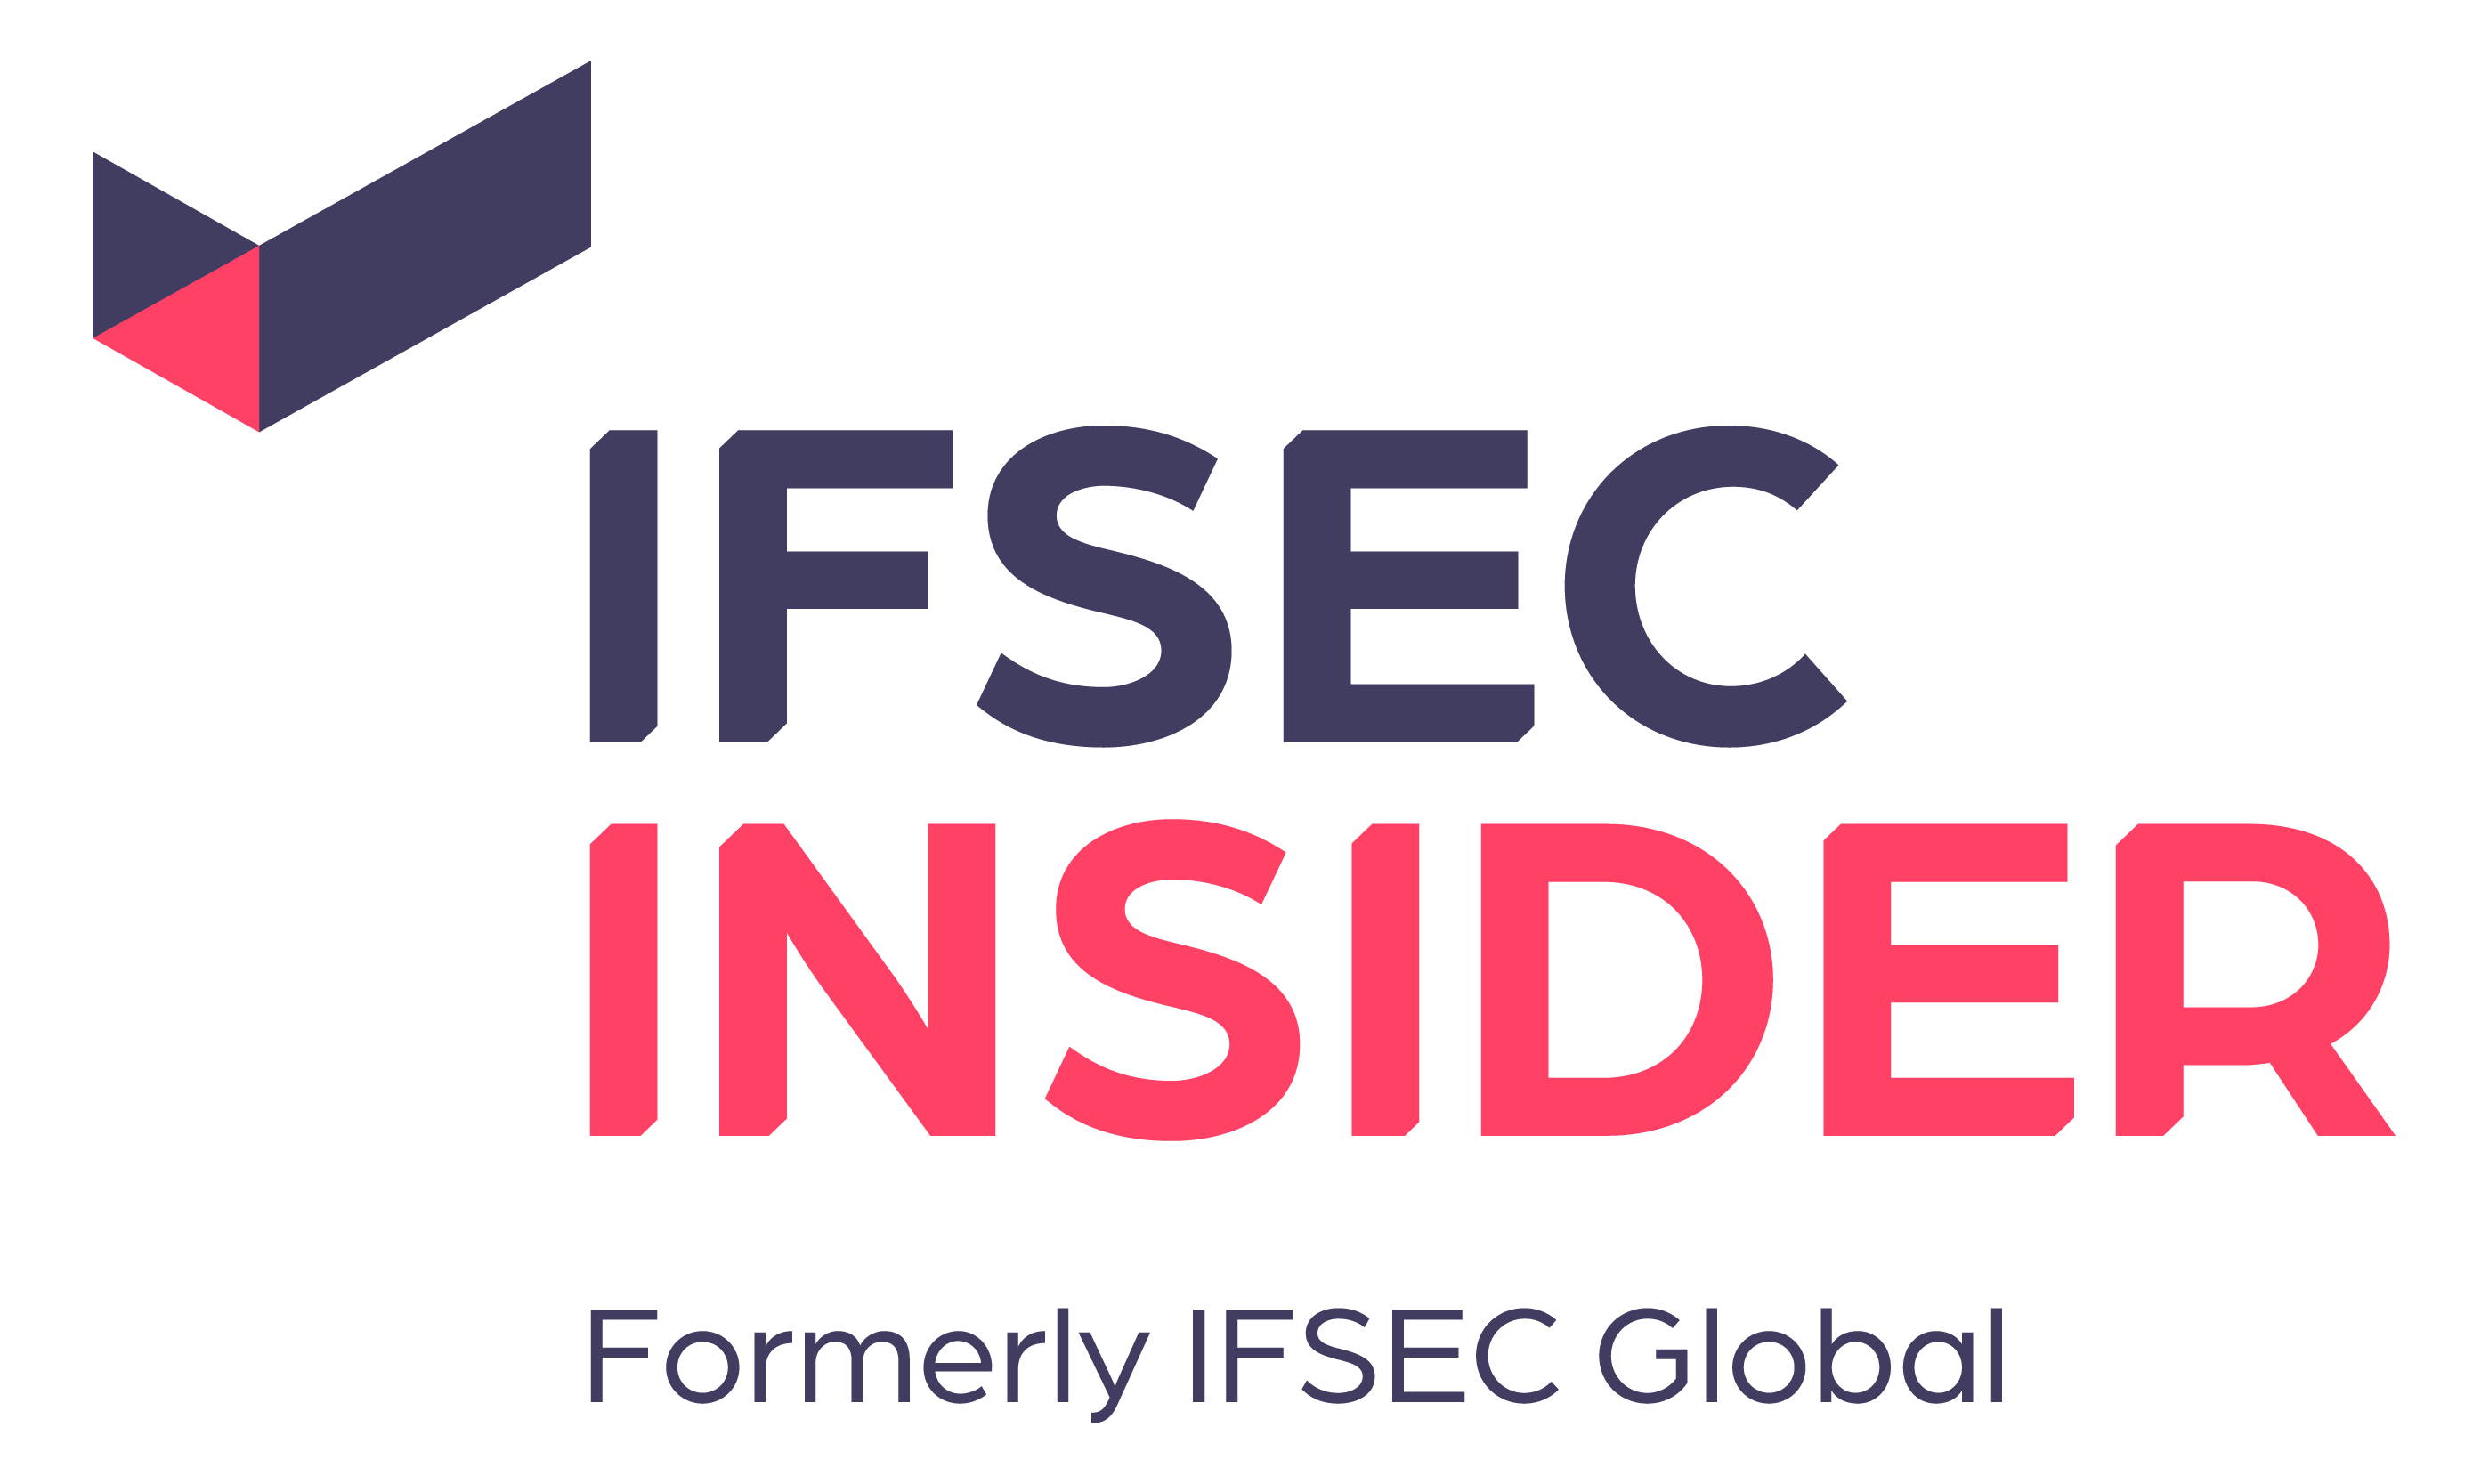 IFSEC Insider